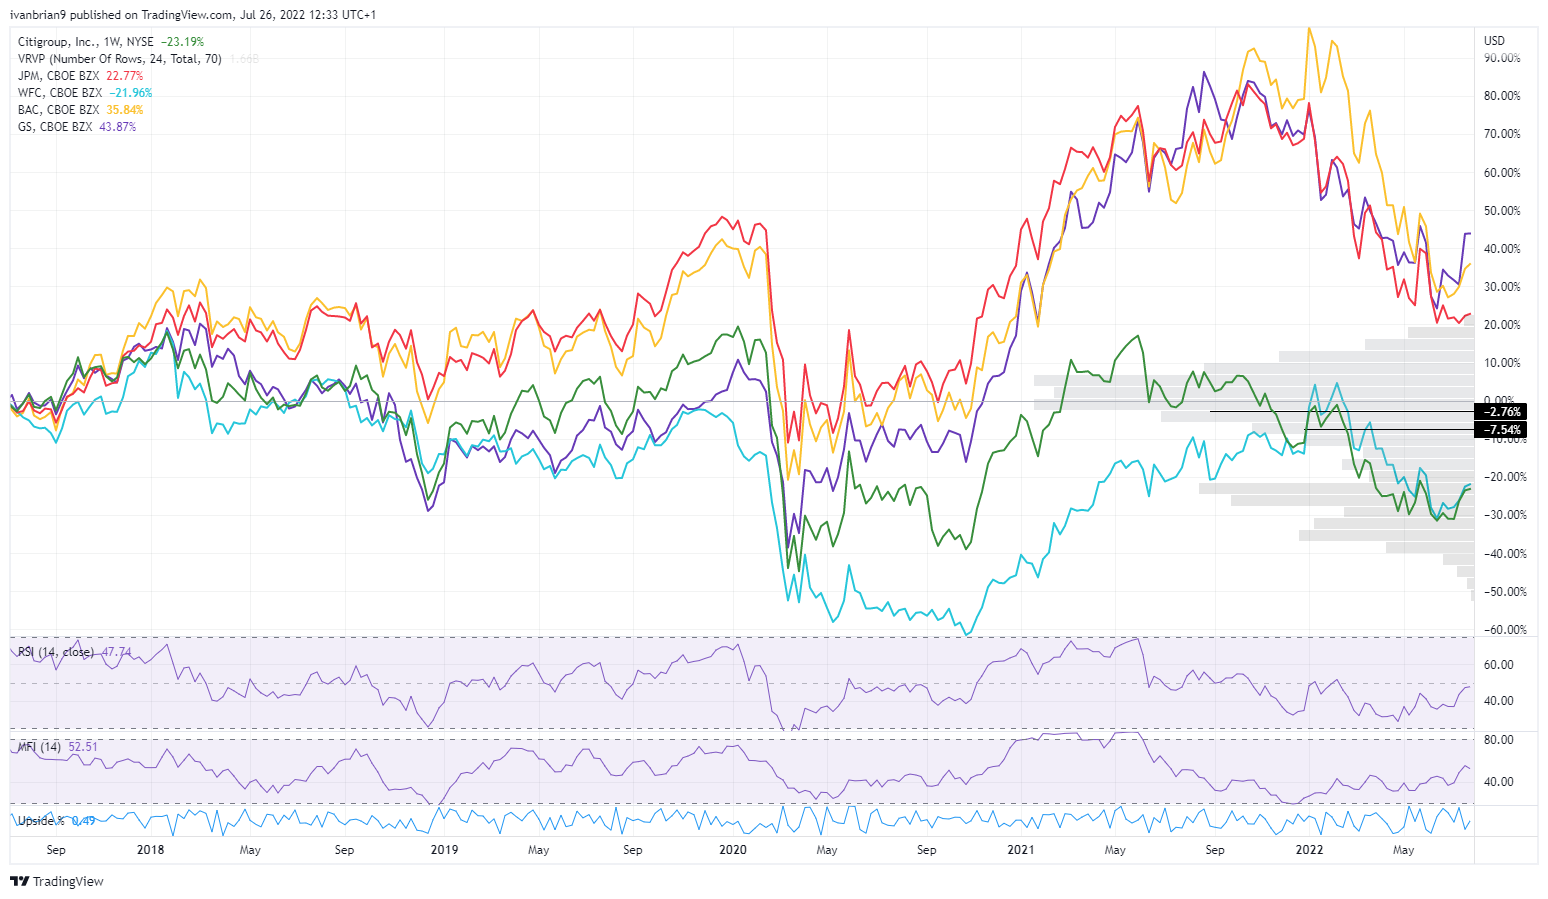 C stock vs other bank stocks performance